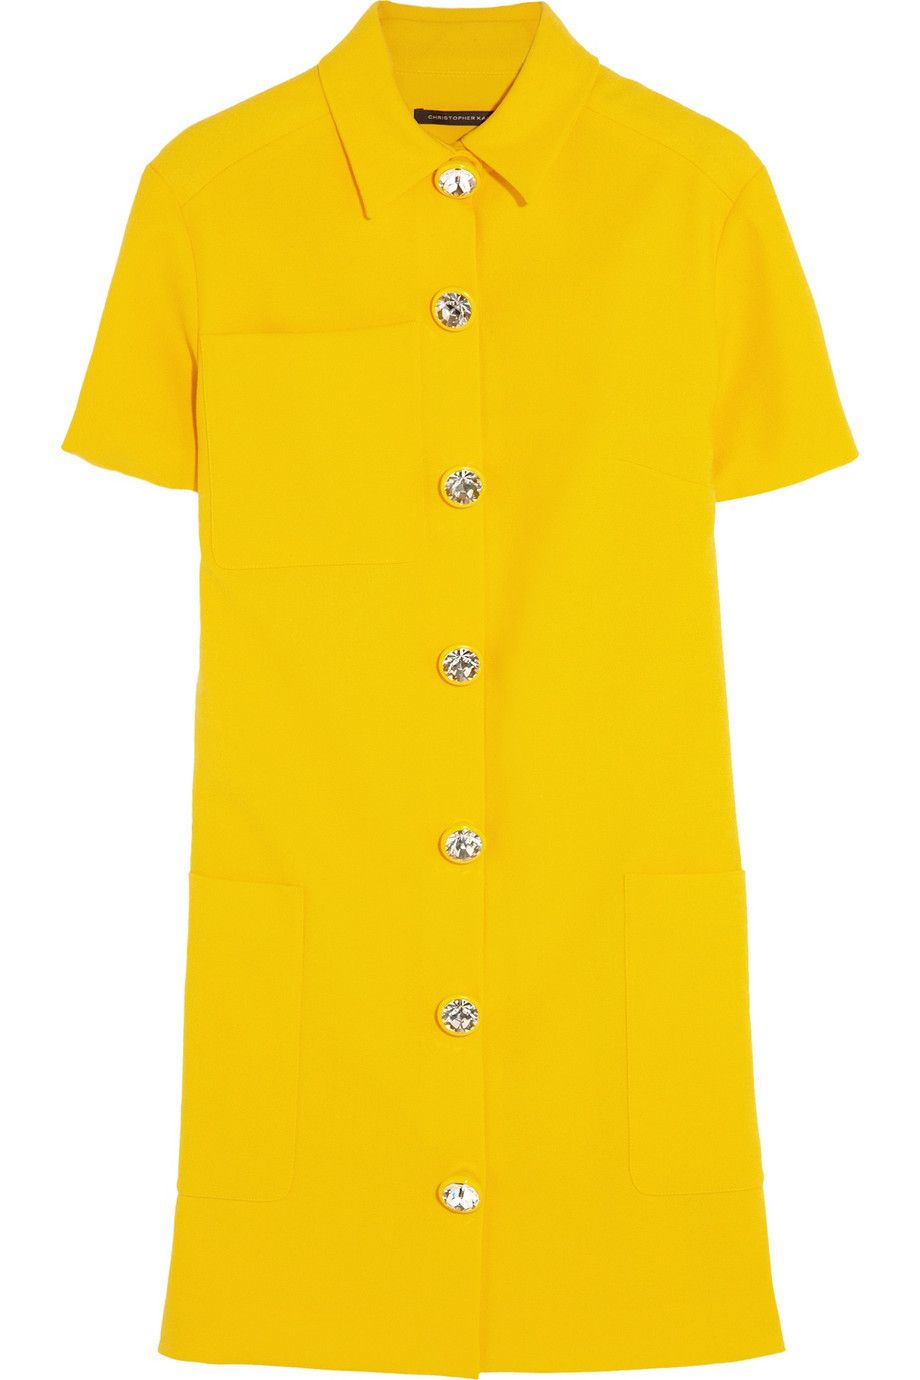 Product, Yellow, Collar, Sleeve, Textile, Orange, Pattern, Fashion, Electric blue, Uniform, 